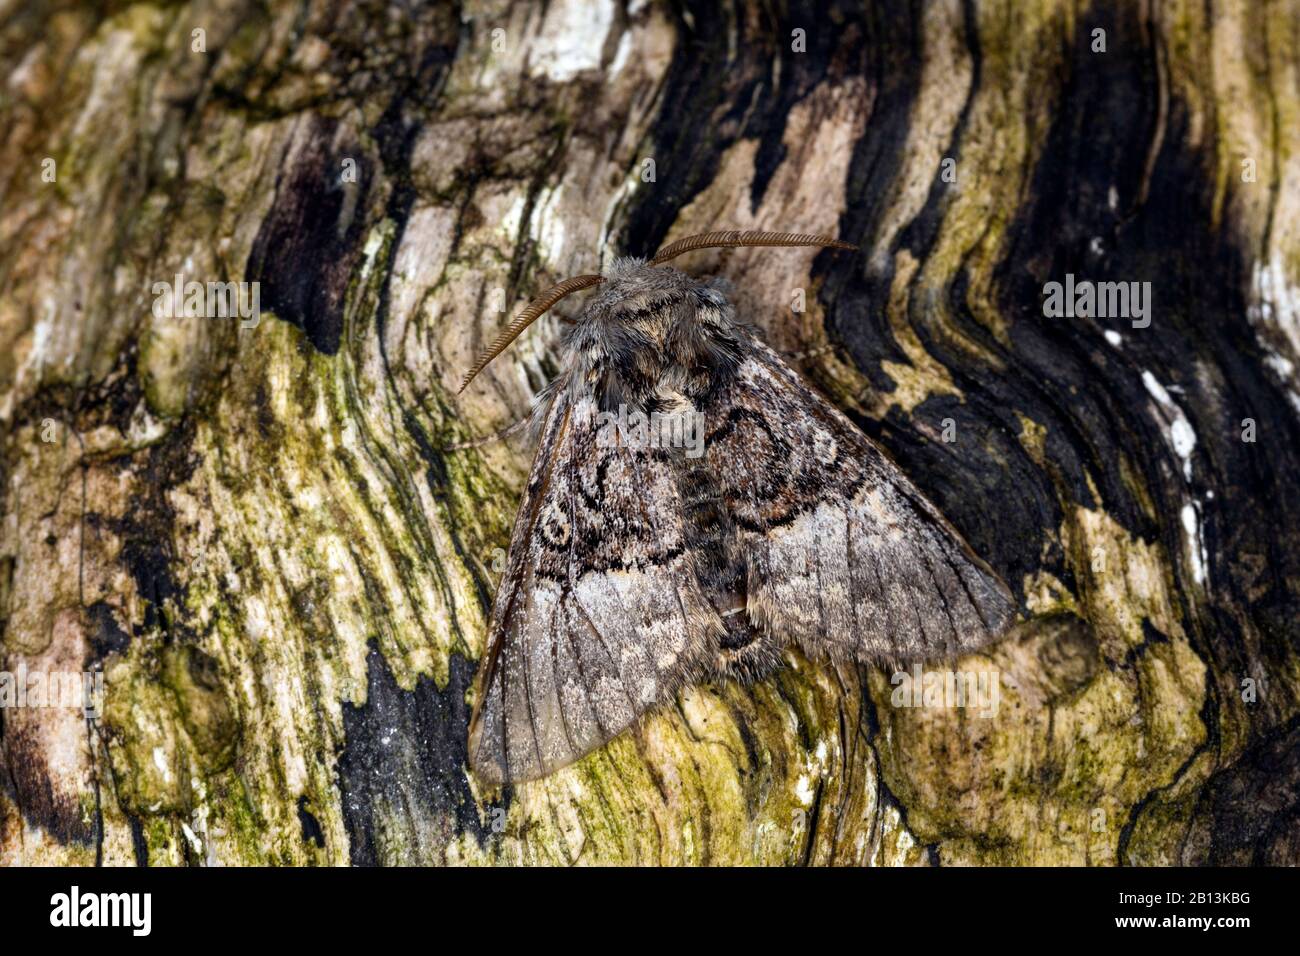 nut-tree tussock (Colocasia coryli), sits on bark, Germany Stock Photo